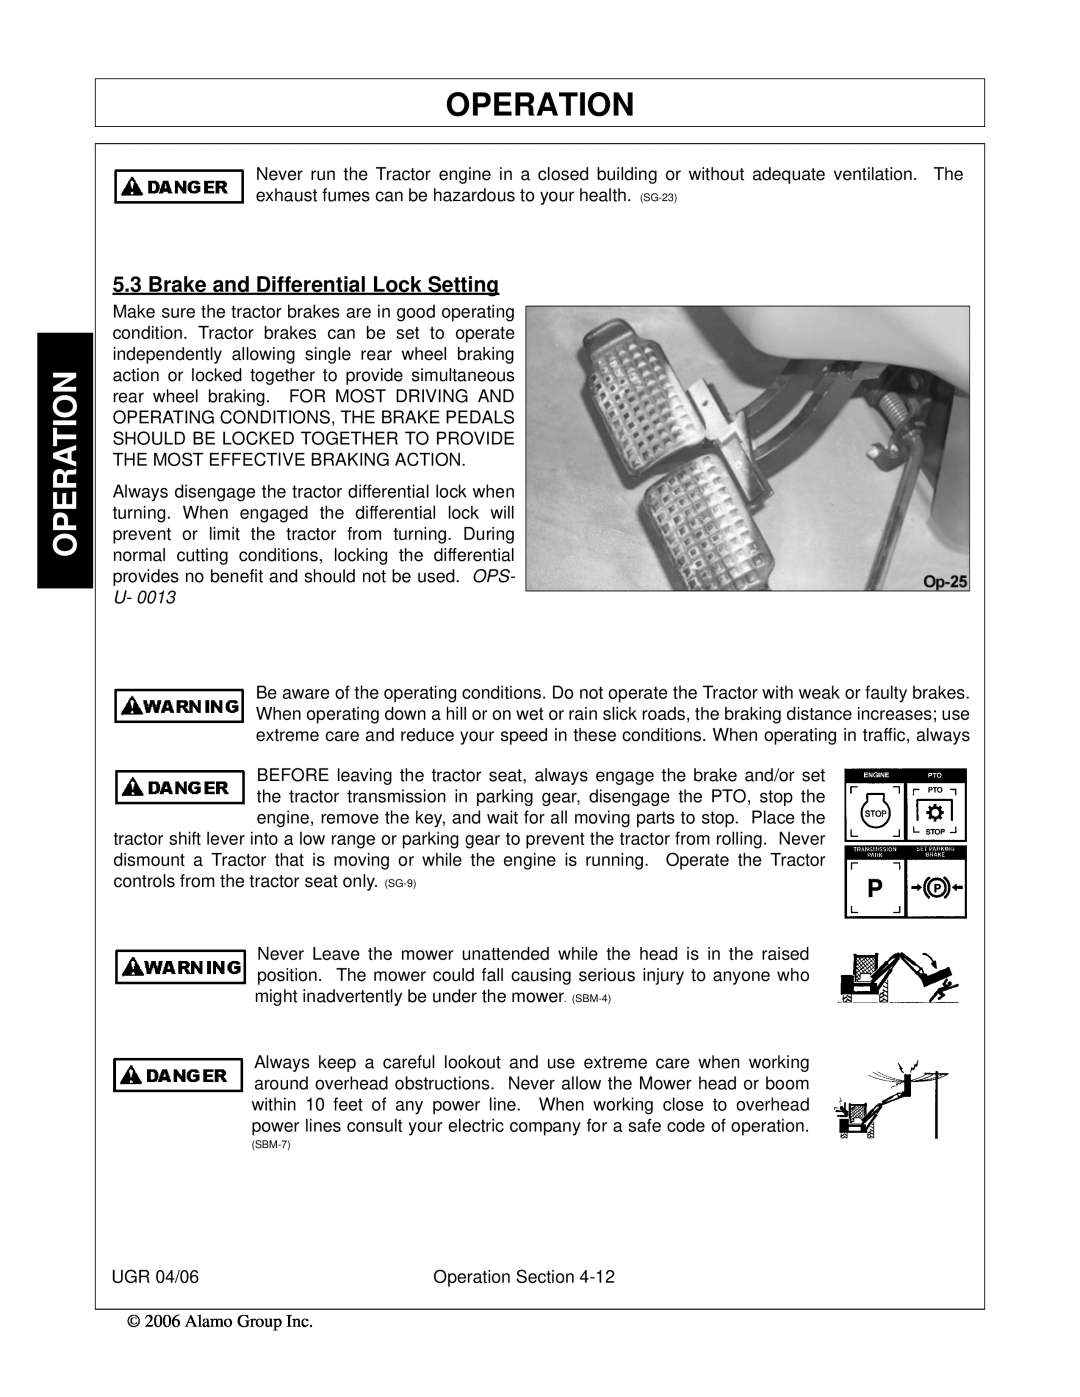 Alamo 02979718C manual Brake and Differential Lock Setting, Operation 